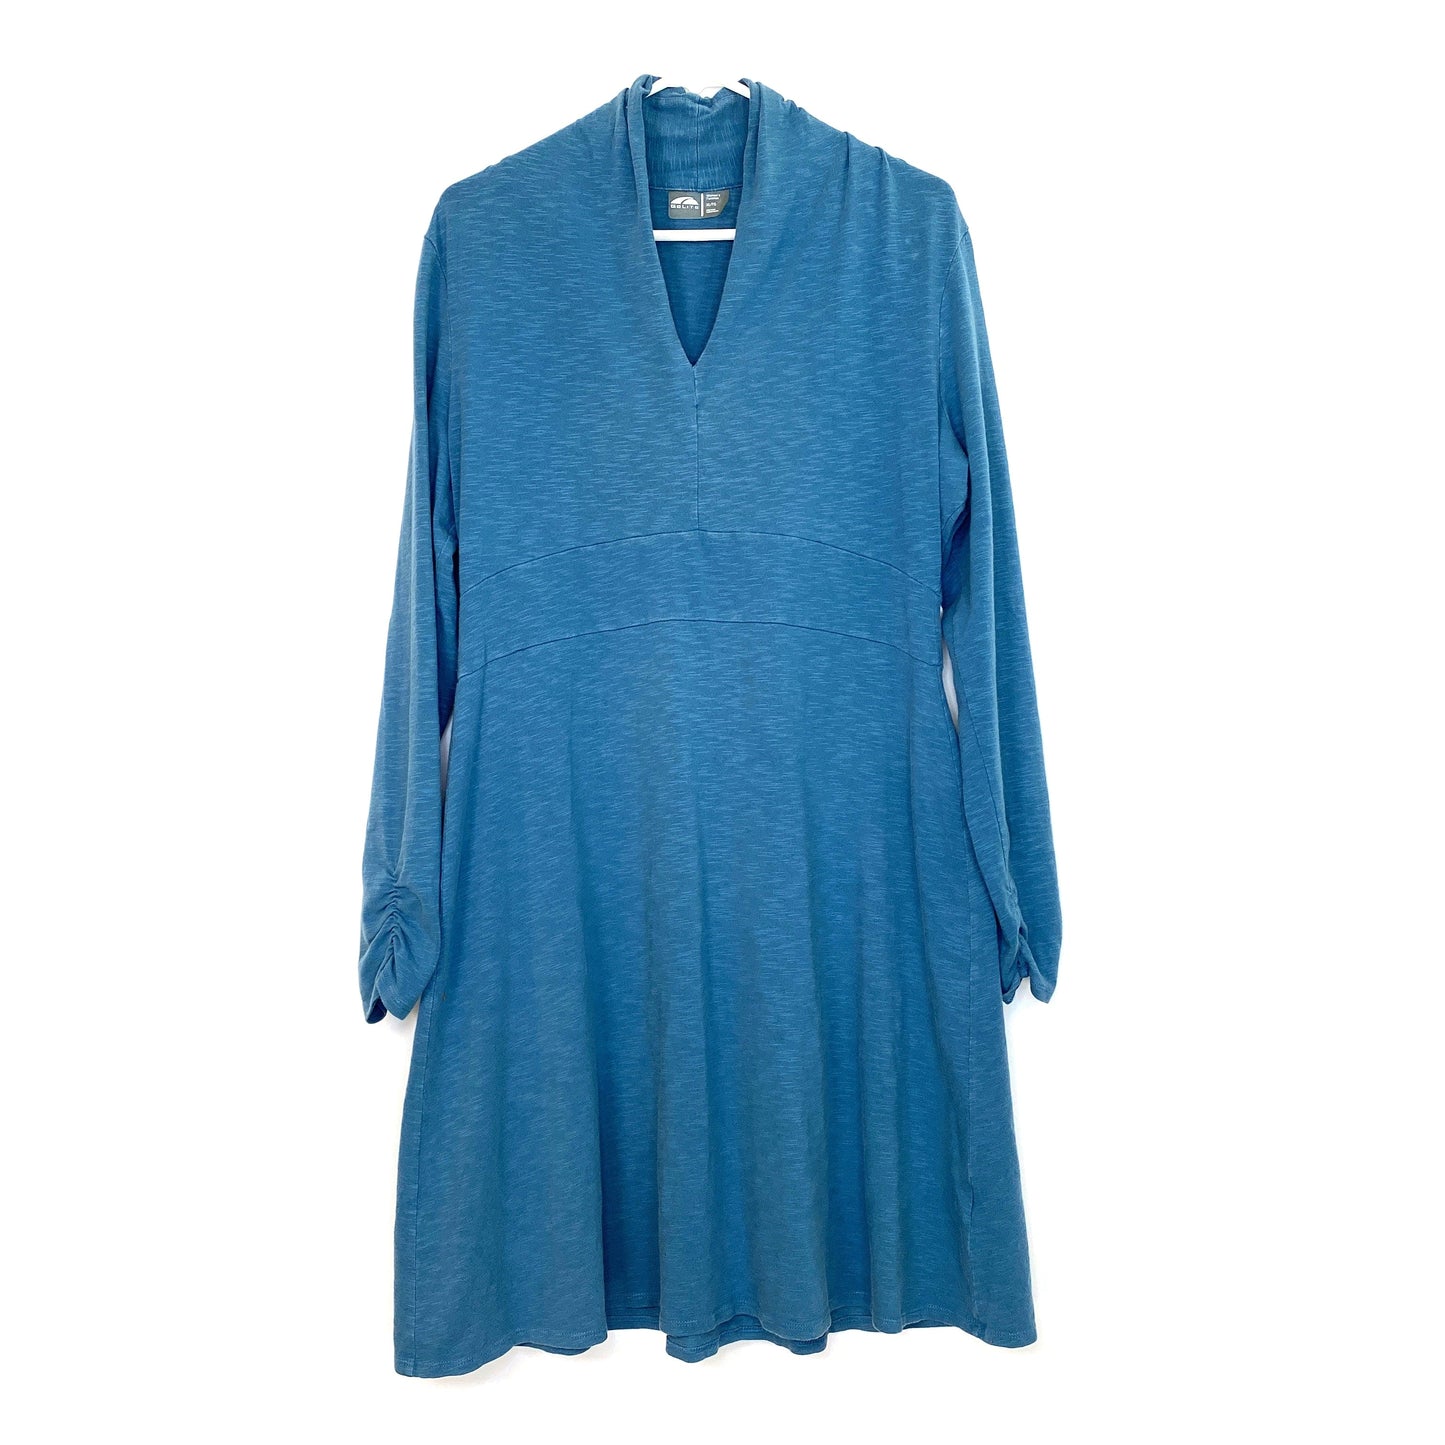 GoLite Womens Size XL Teal Blue T-Shirt Dress V-Neck Pockets Stretch L/s